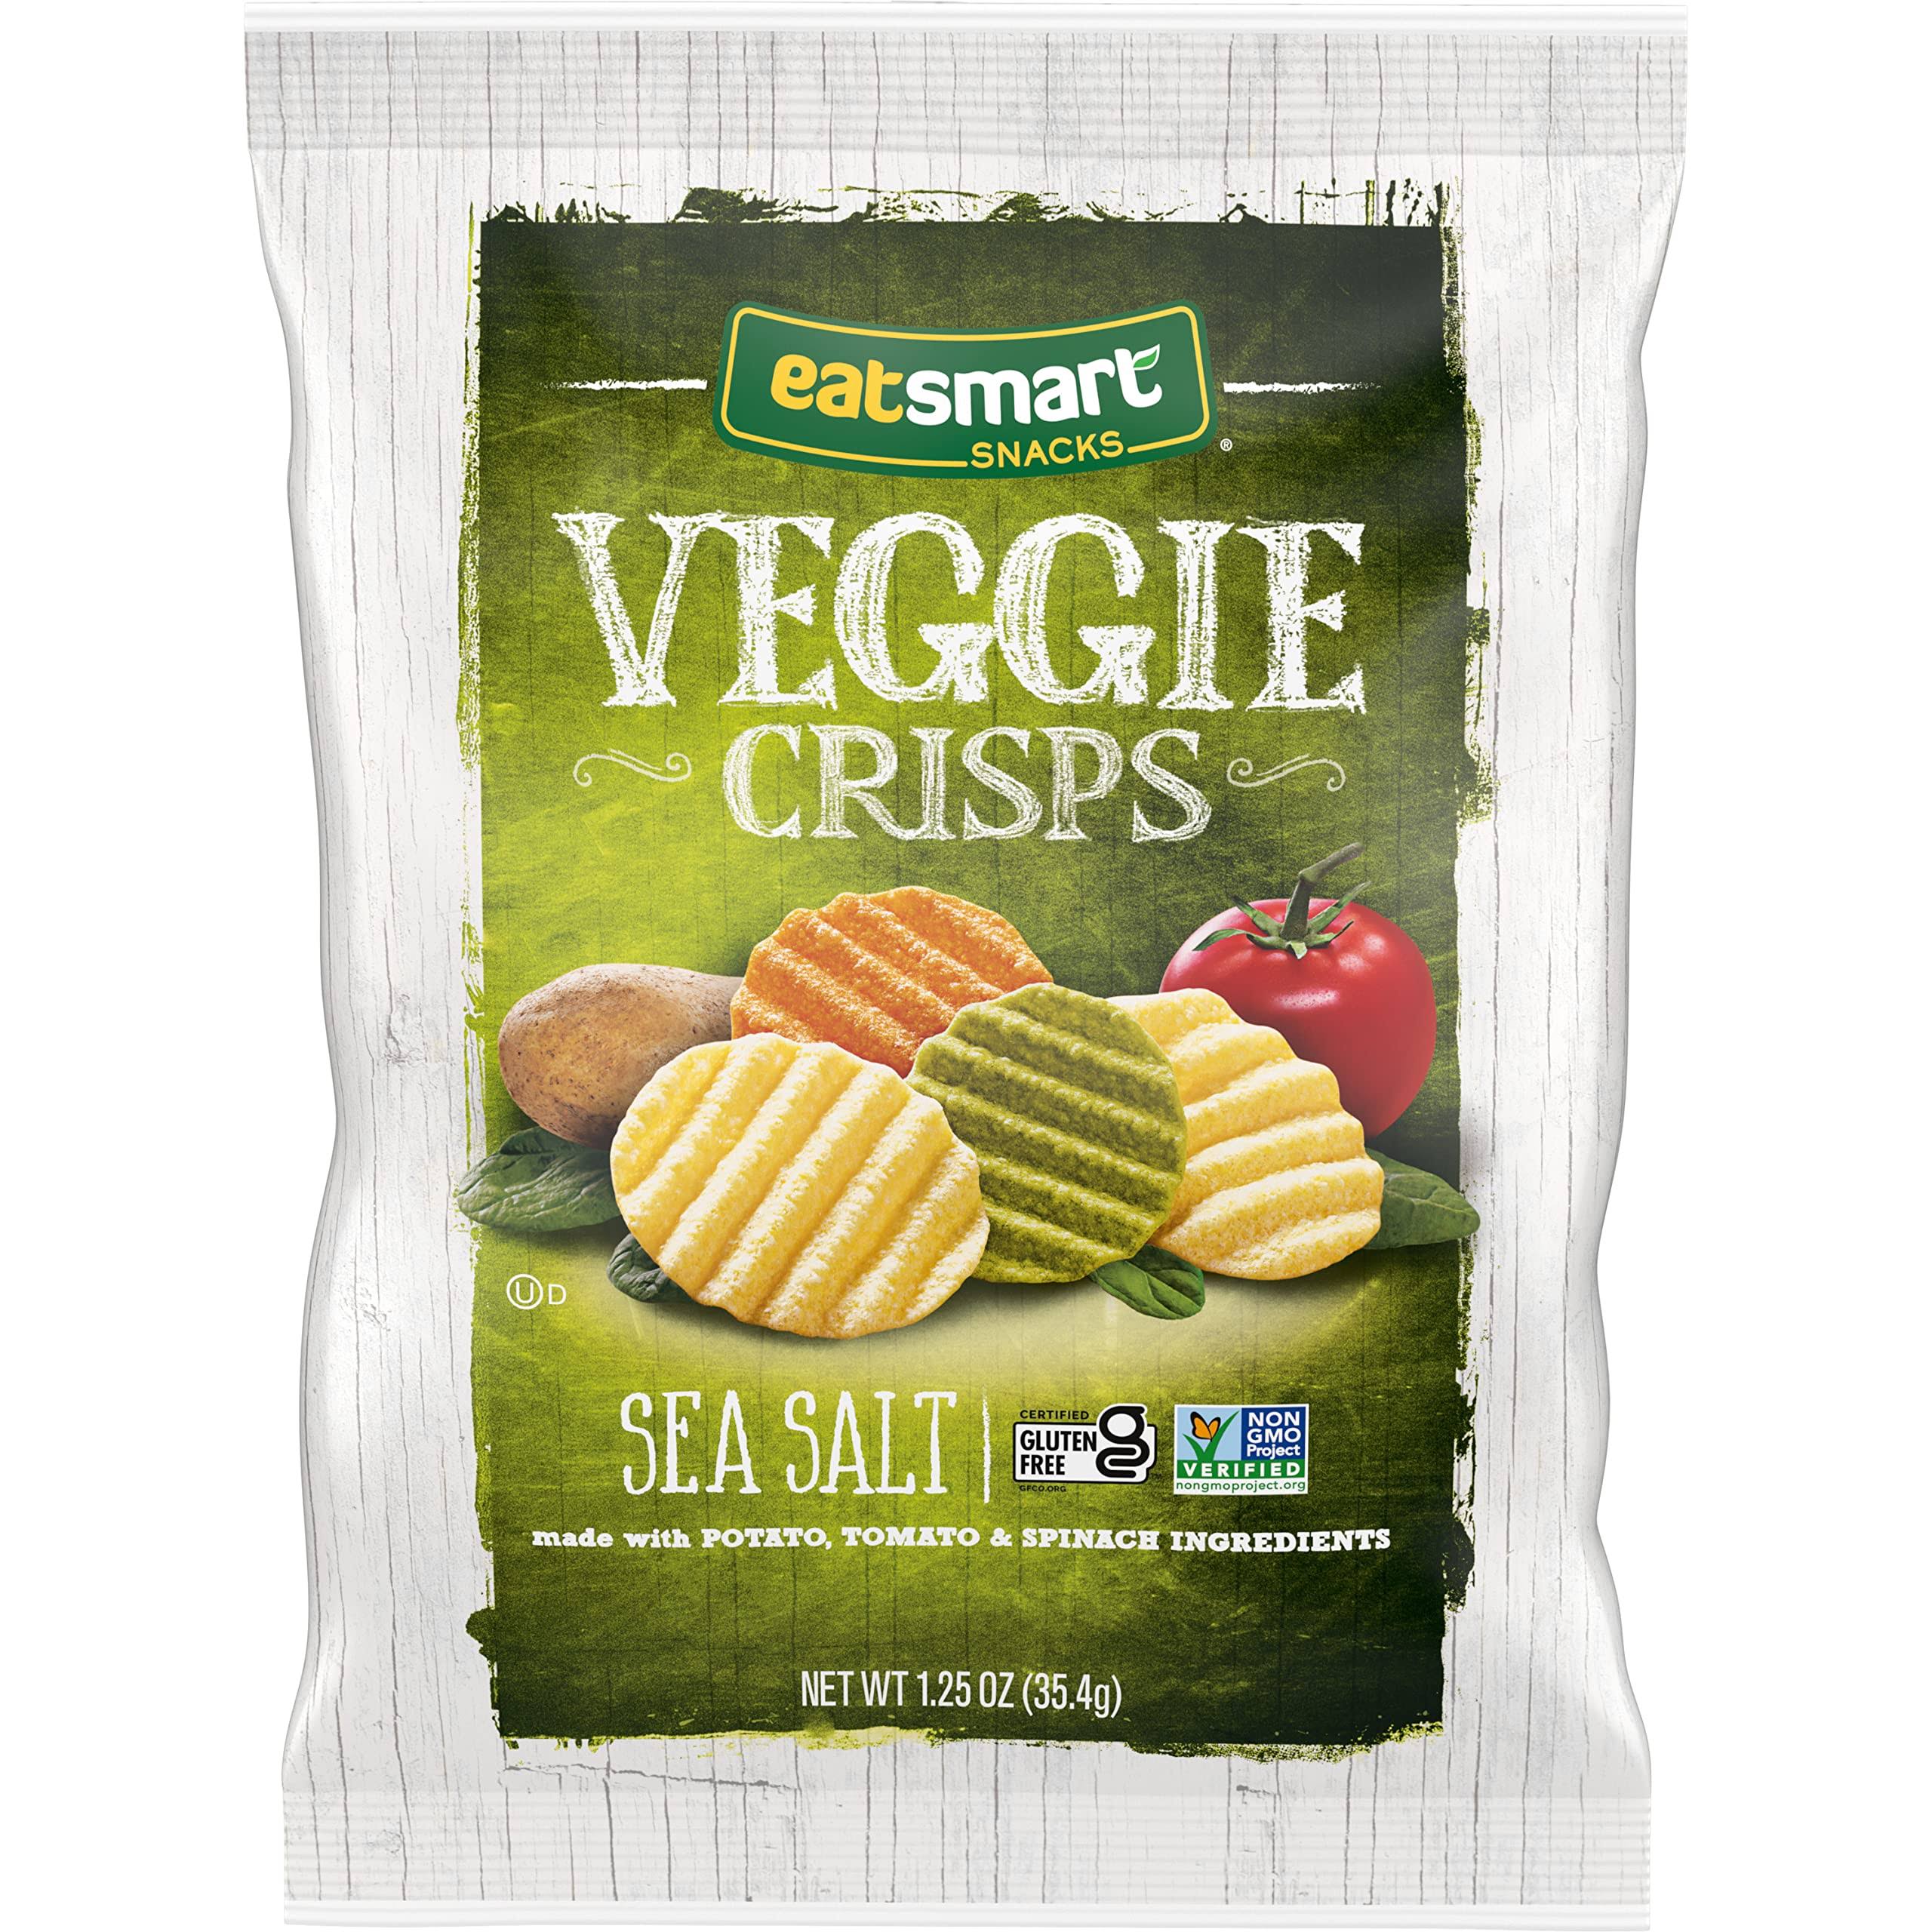 Eatsmart Garden Veggie Crisps - Sea Salt